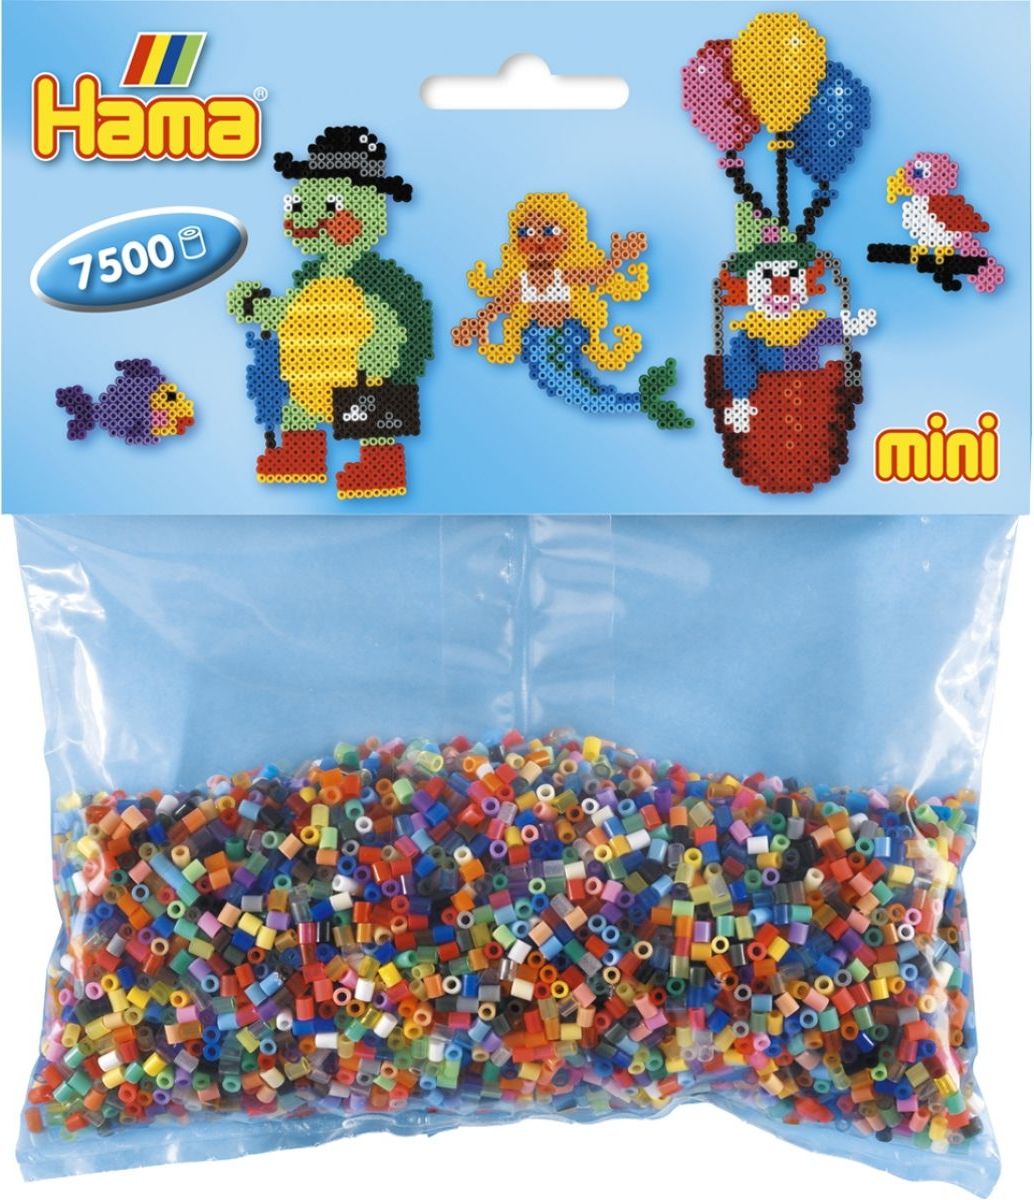 Hama H583 Mini Mix korálků v sáčku 7500 ks - obrázek 1